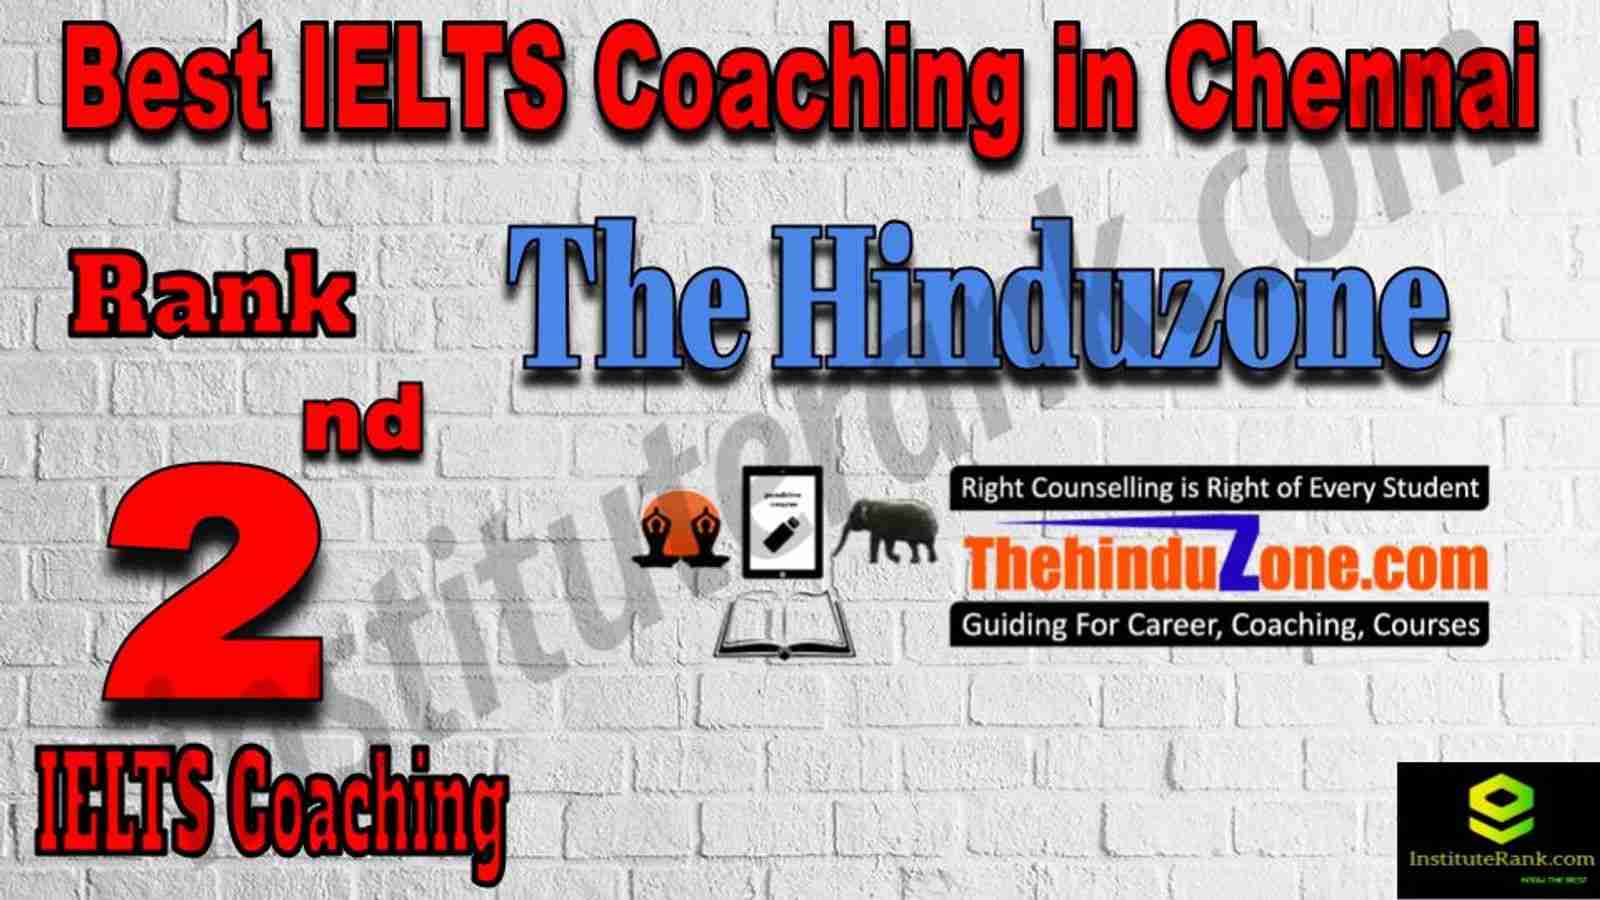 2nd Best IELTS Coaching in Chennai